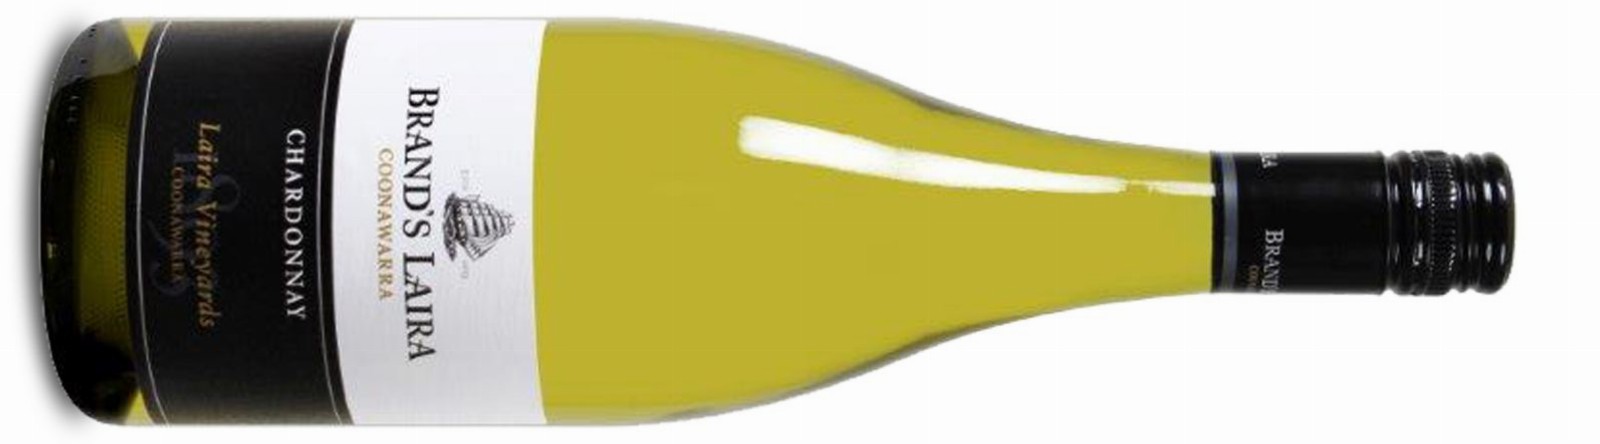 Brand´s Laira Coonawarra Chardonnay 2013